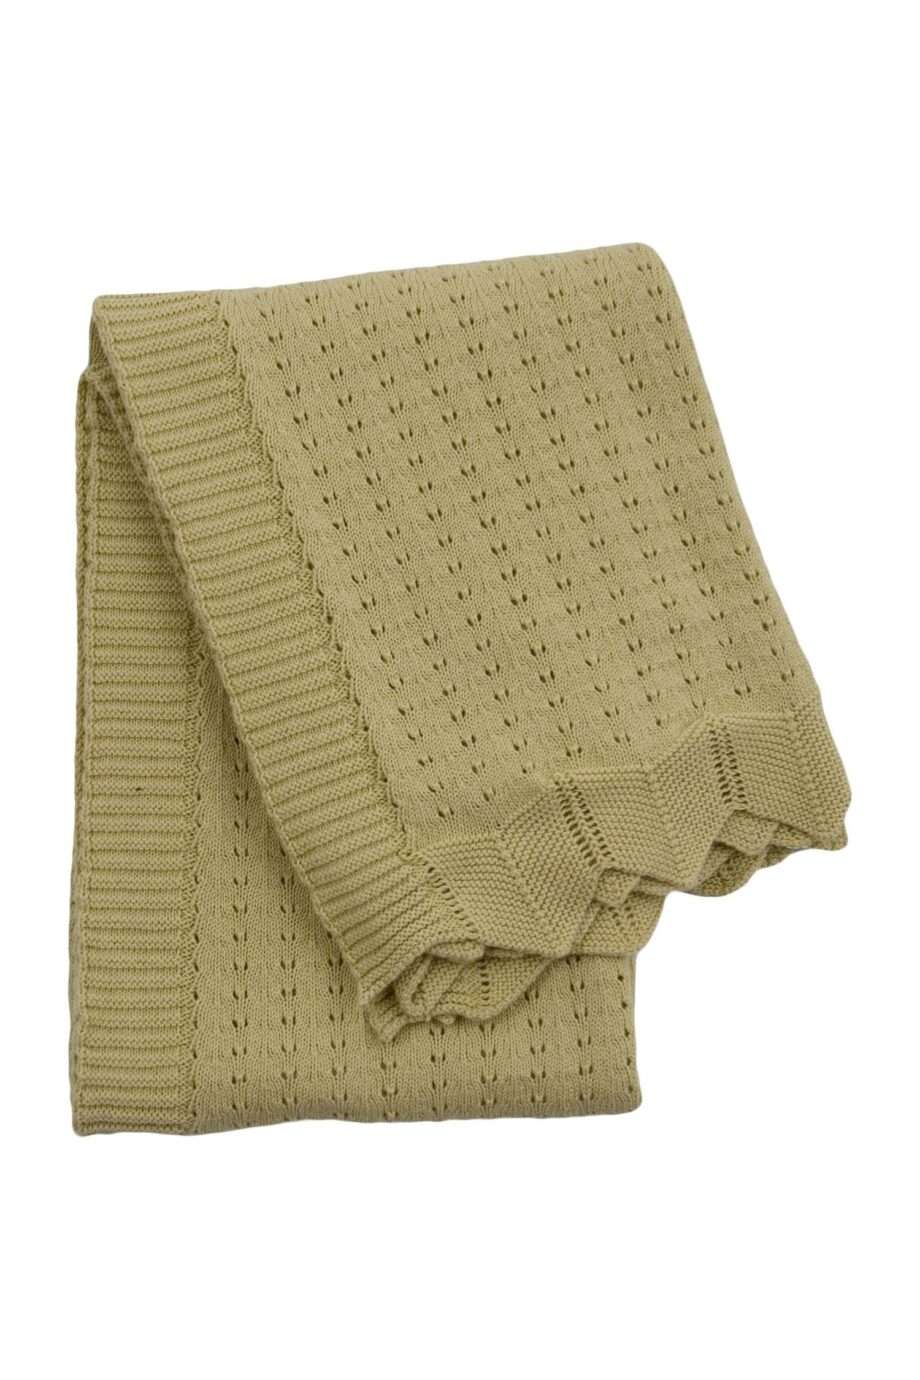 nouveau ochre knitted cotton little blanket small